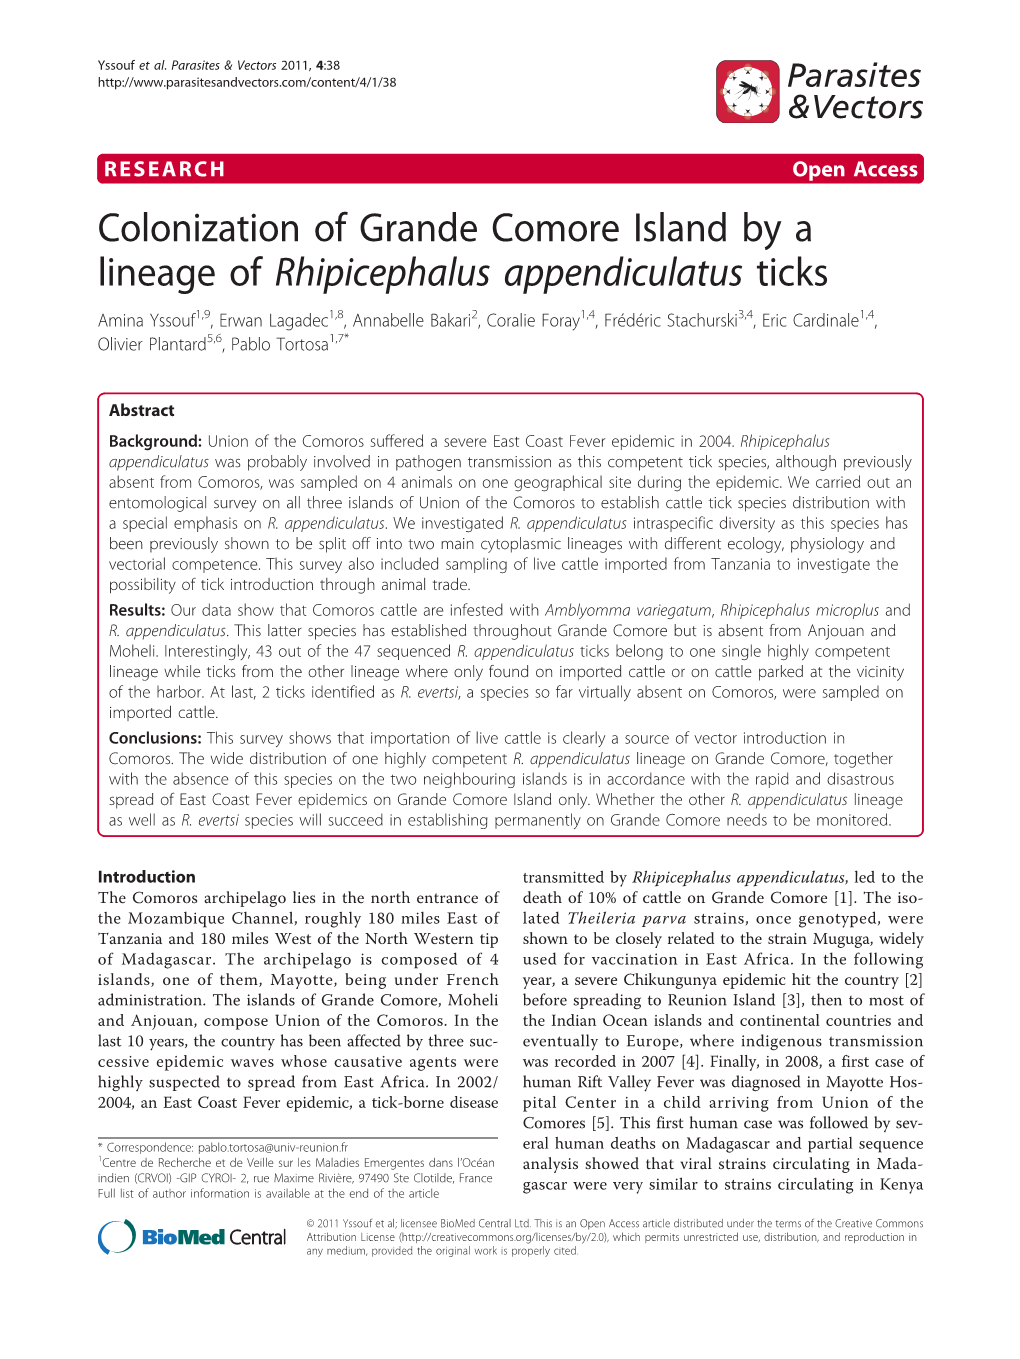 Colonization of Grande Comore Island by a Lineage of Rhipicephalus Appendiculatus Ticks